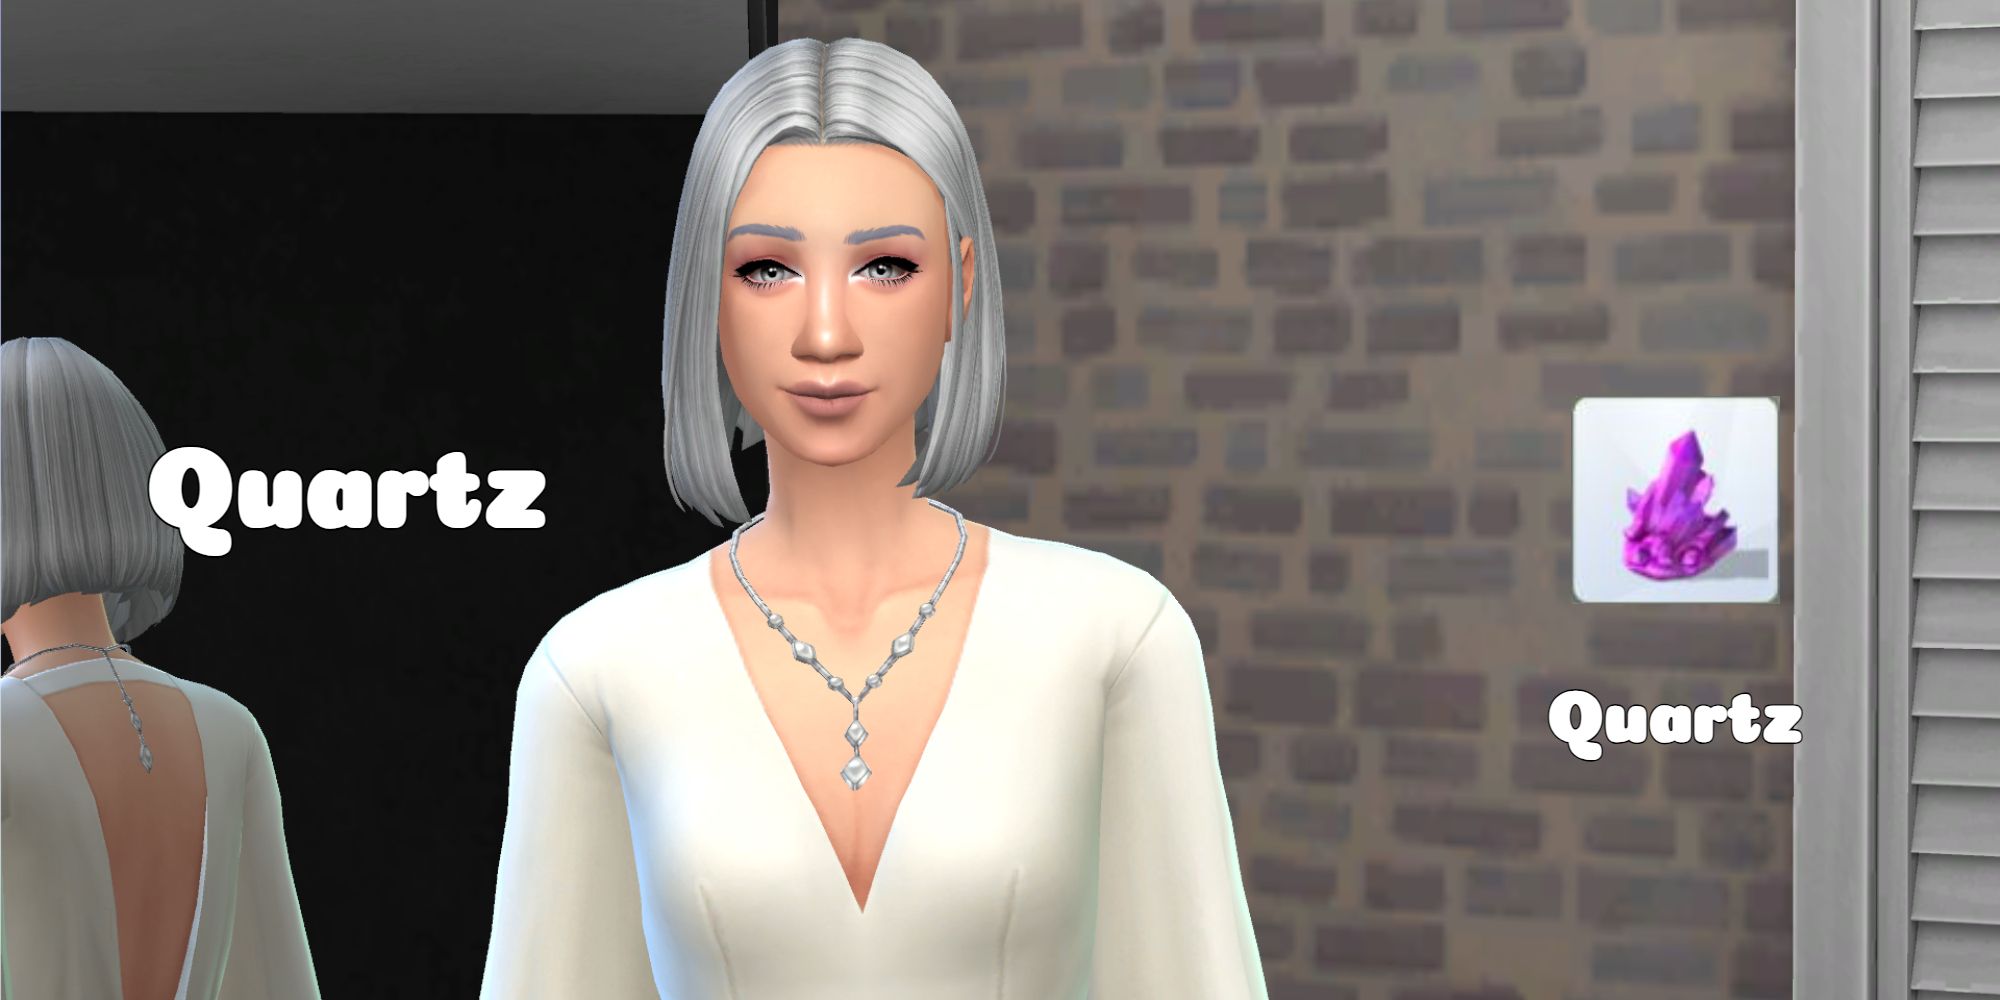 QICC - Alastair Necklace - The Sims 4 Create a Sim - CurseForge